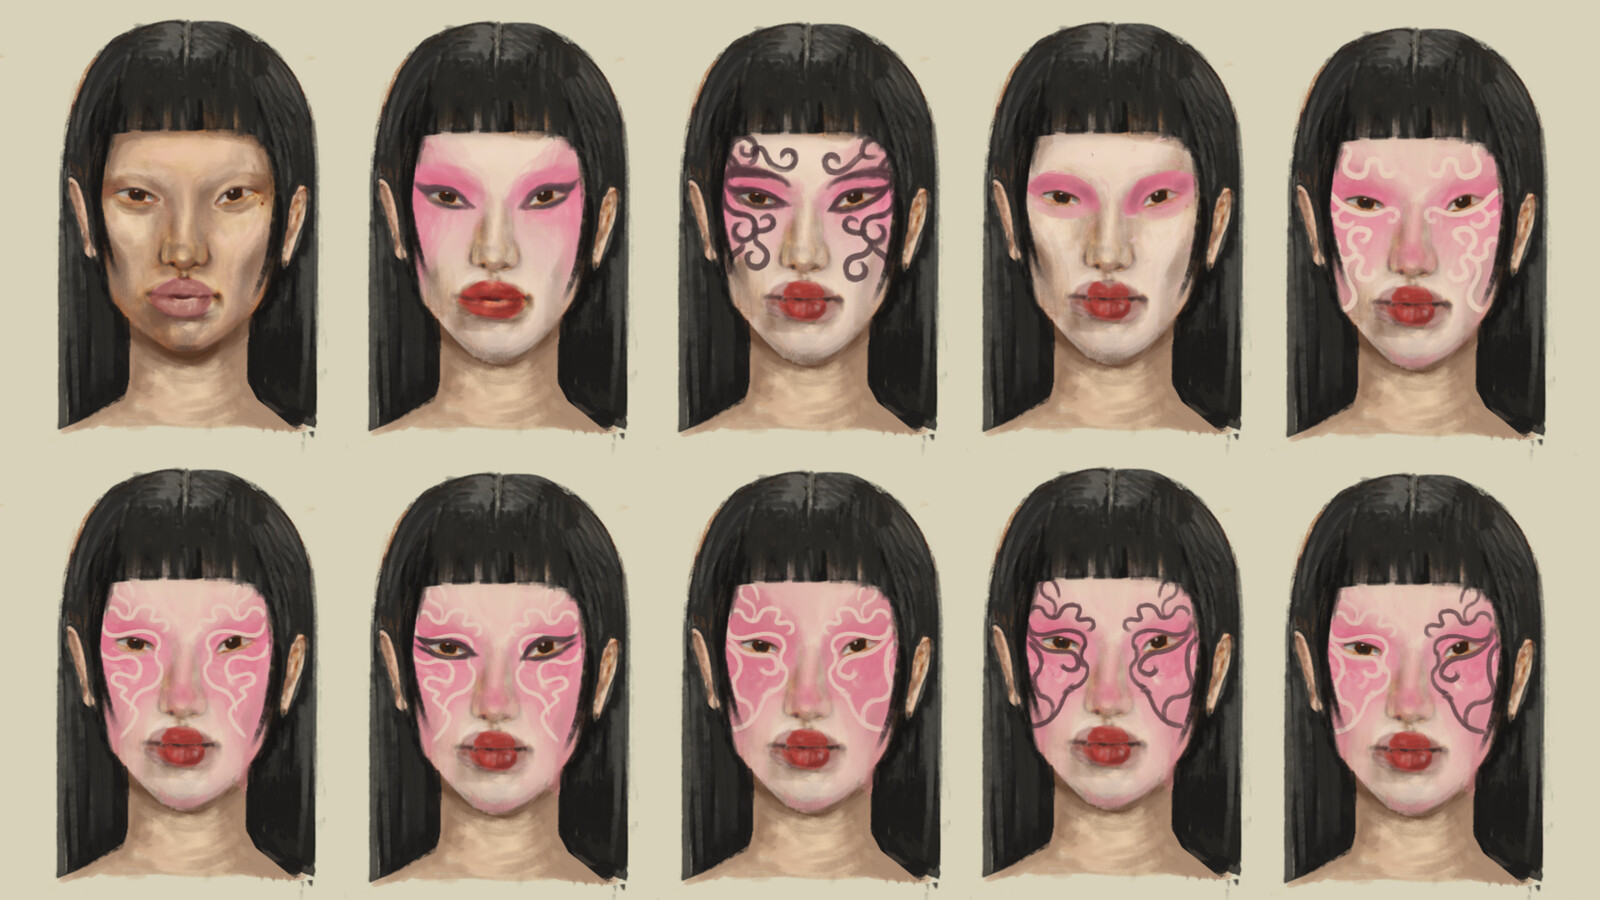 Makeup variations